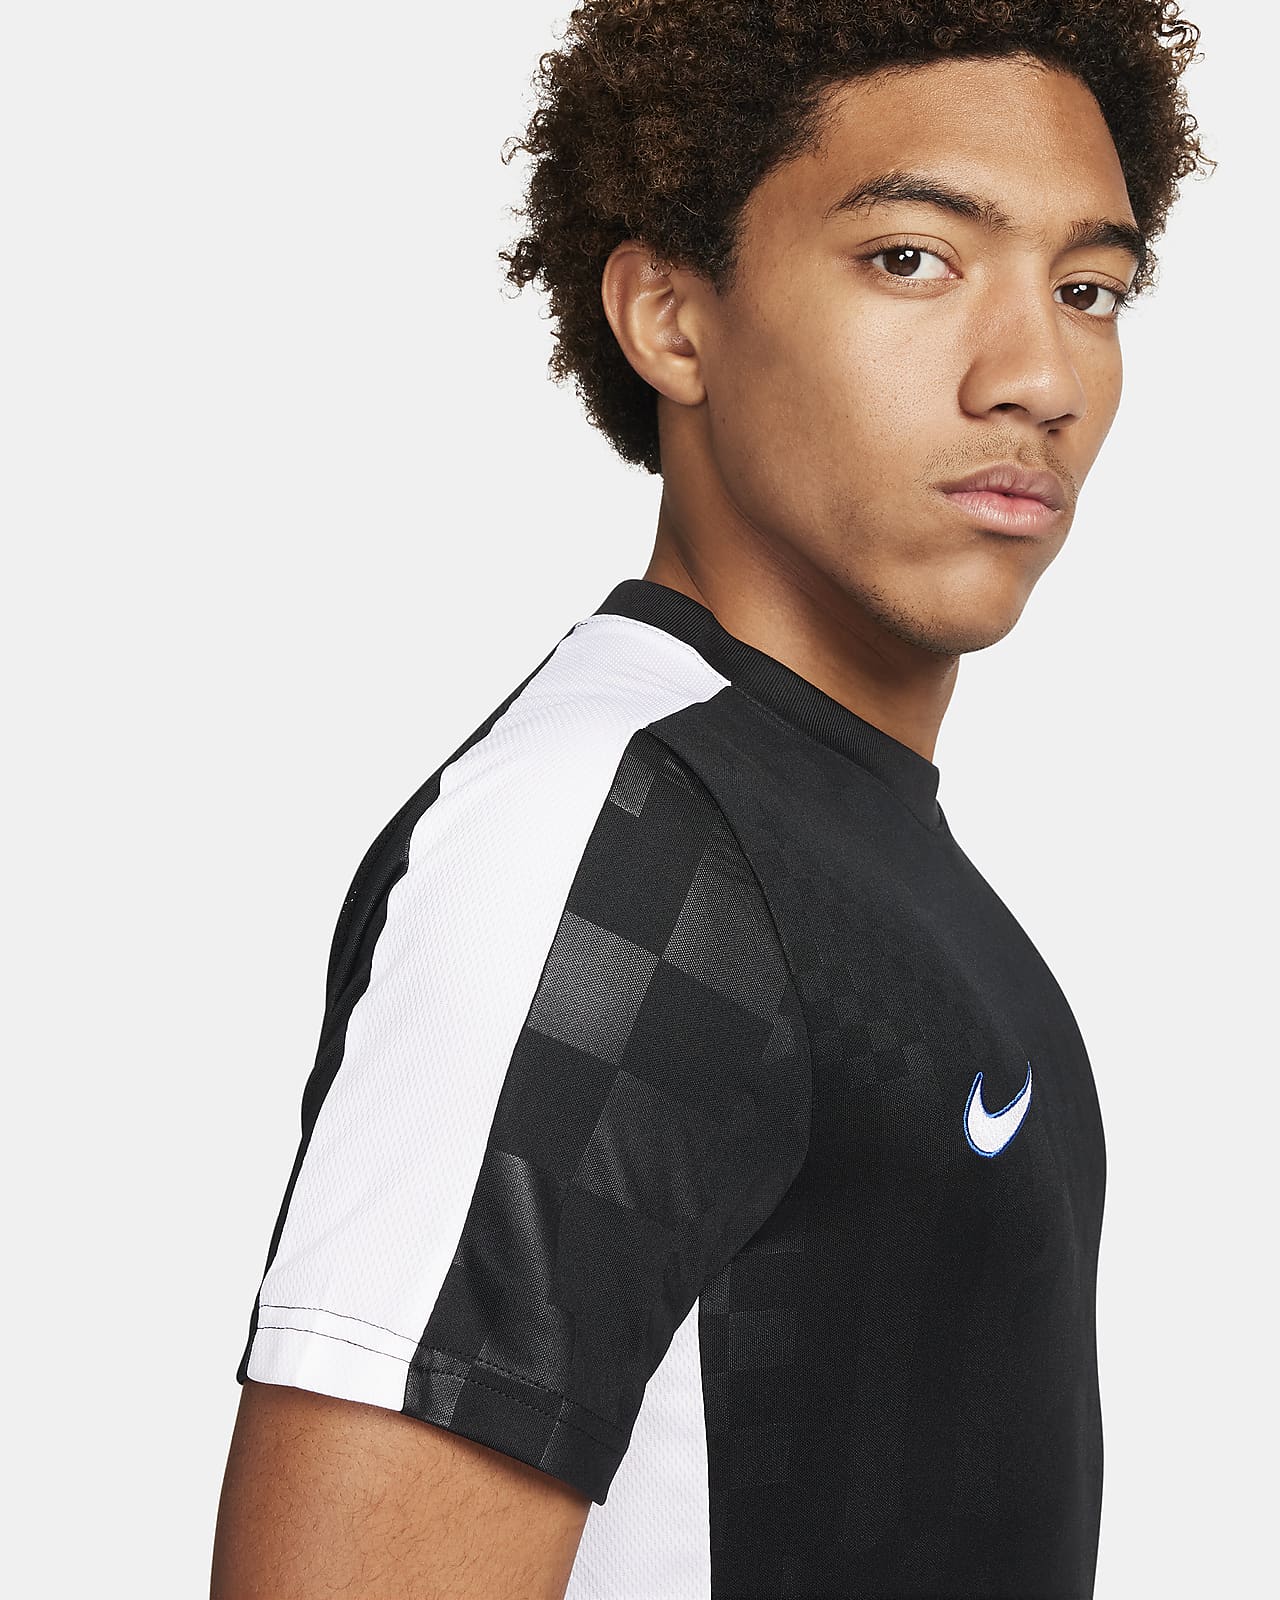 Nike Academy Men's Dri-FIT Soccer Short-Sleeve Top.